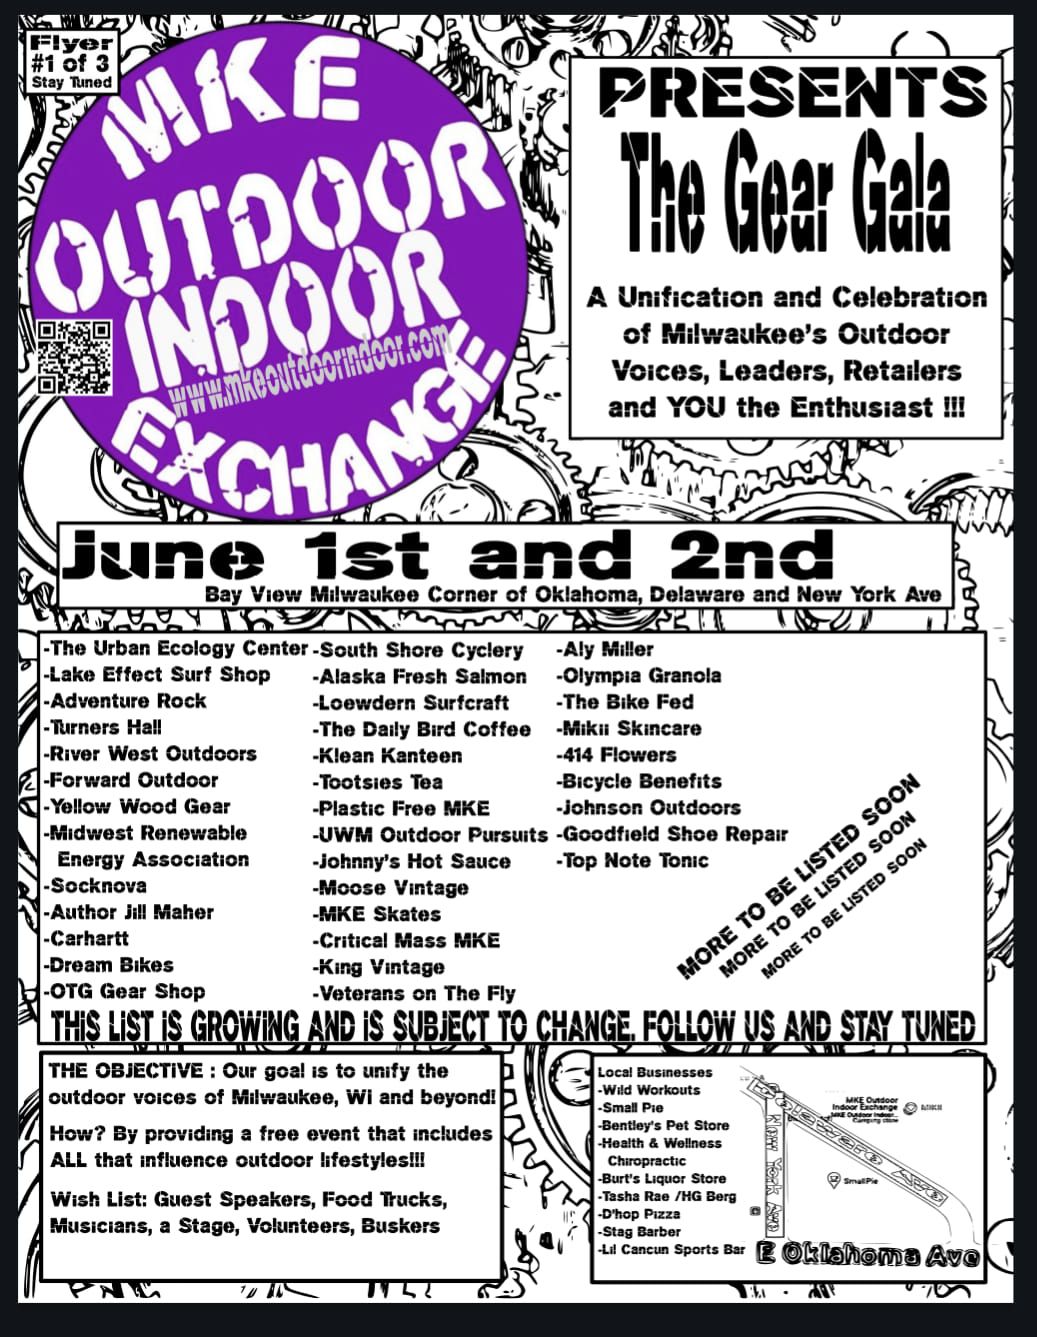 The Gear Gala